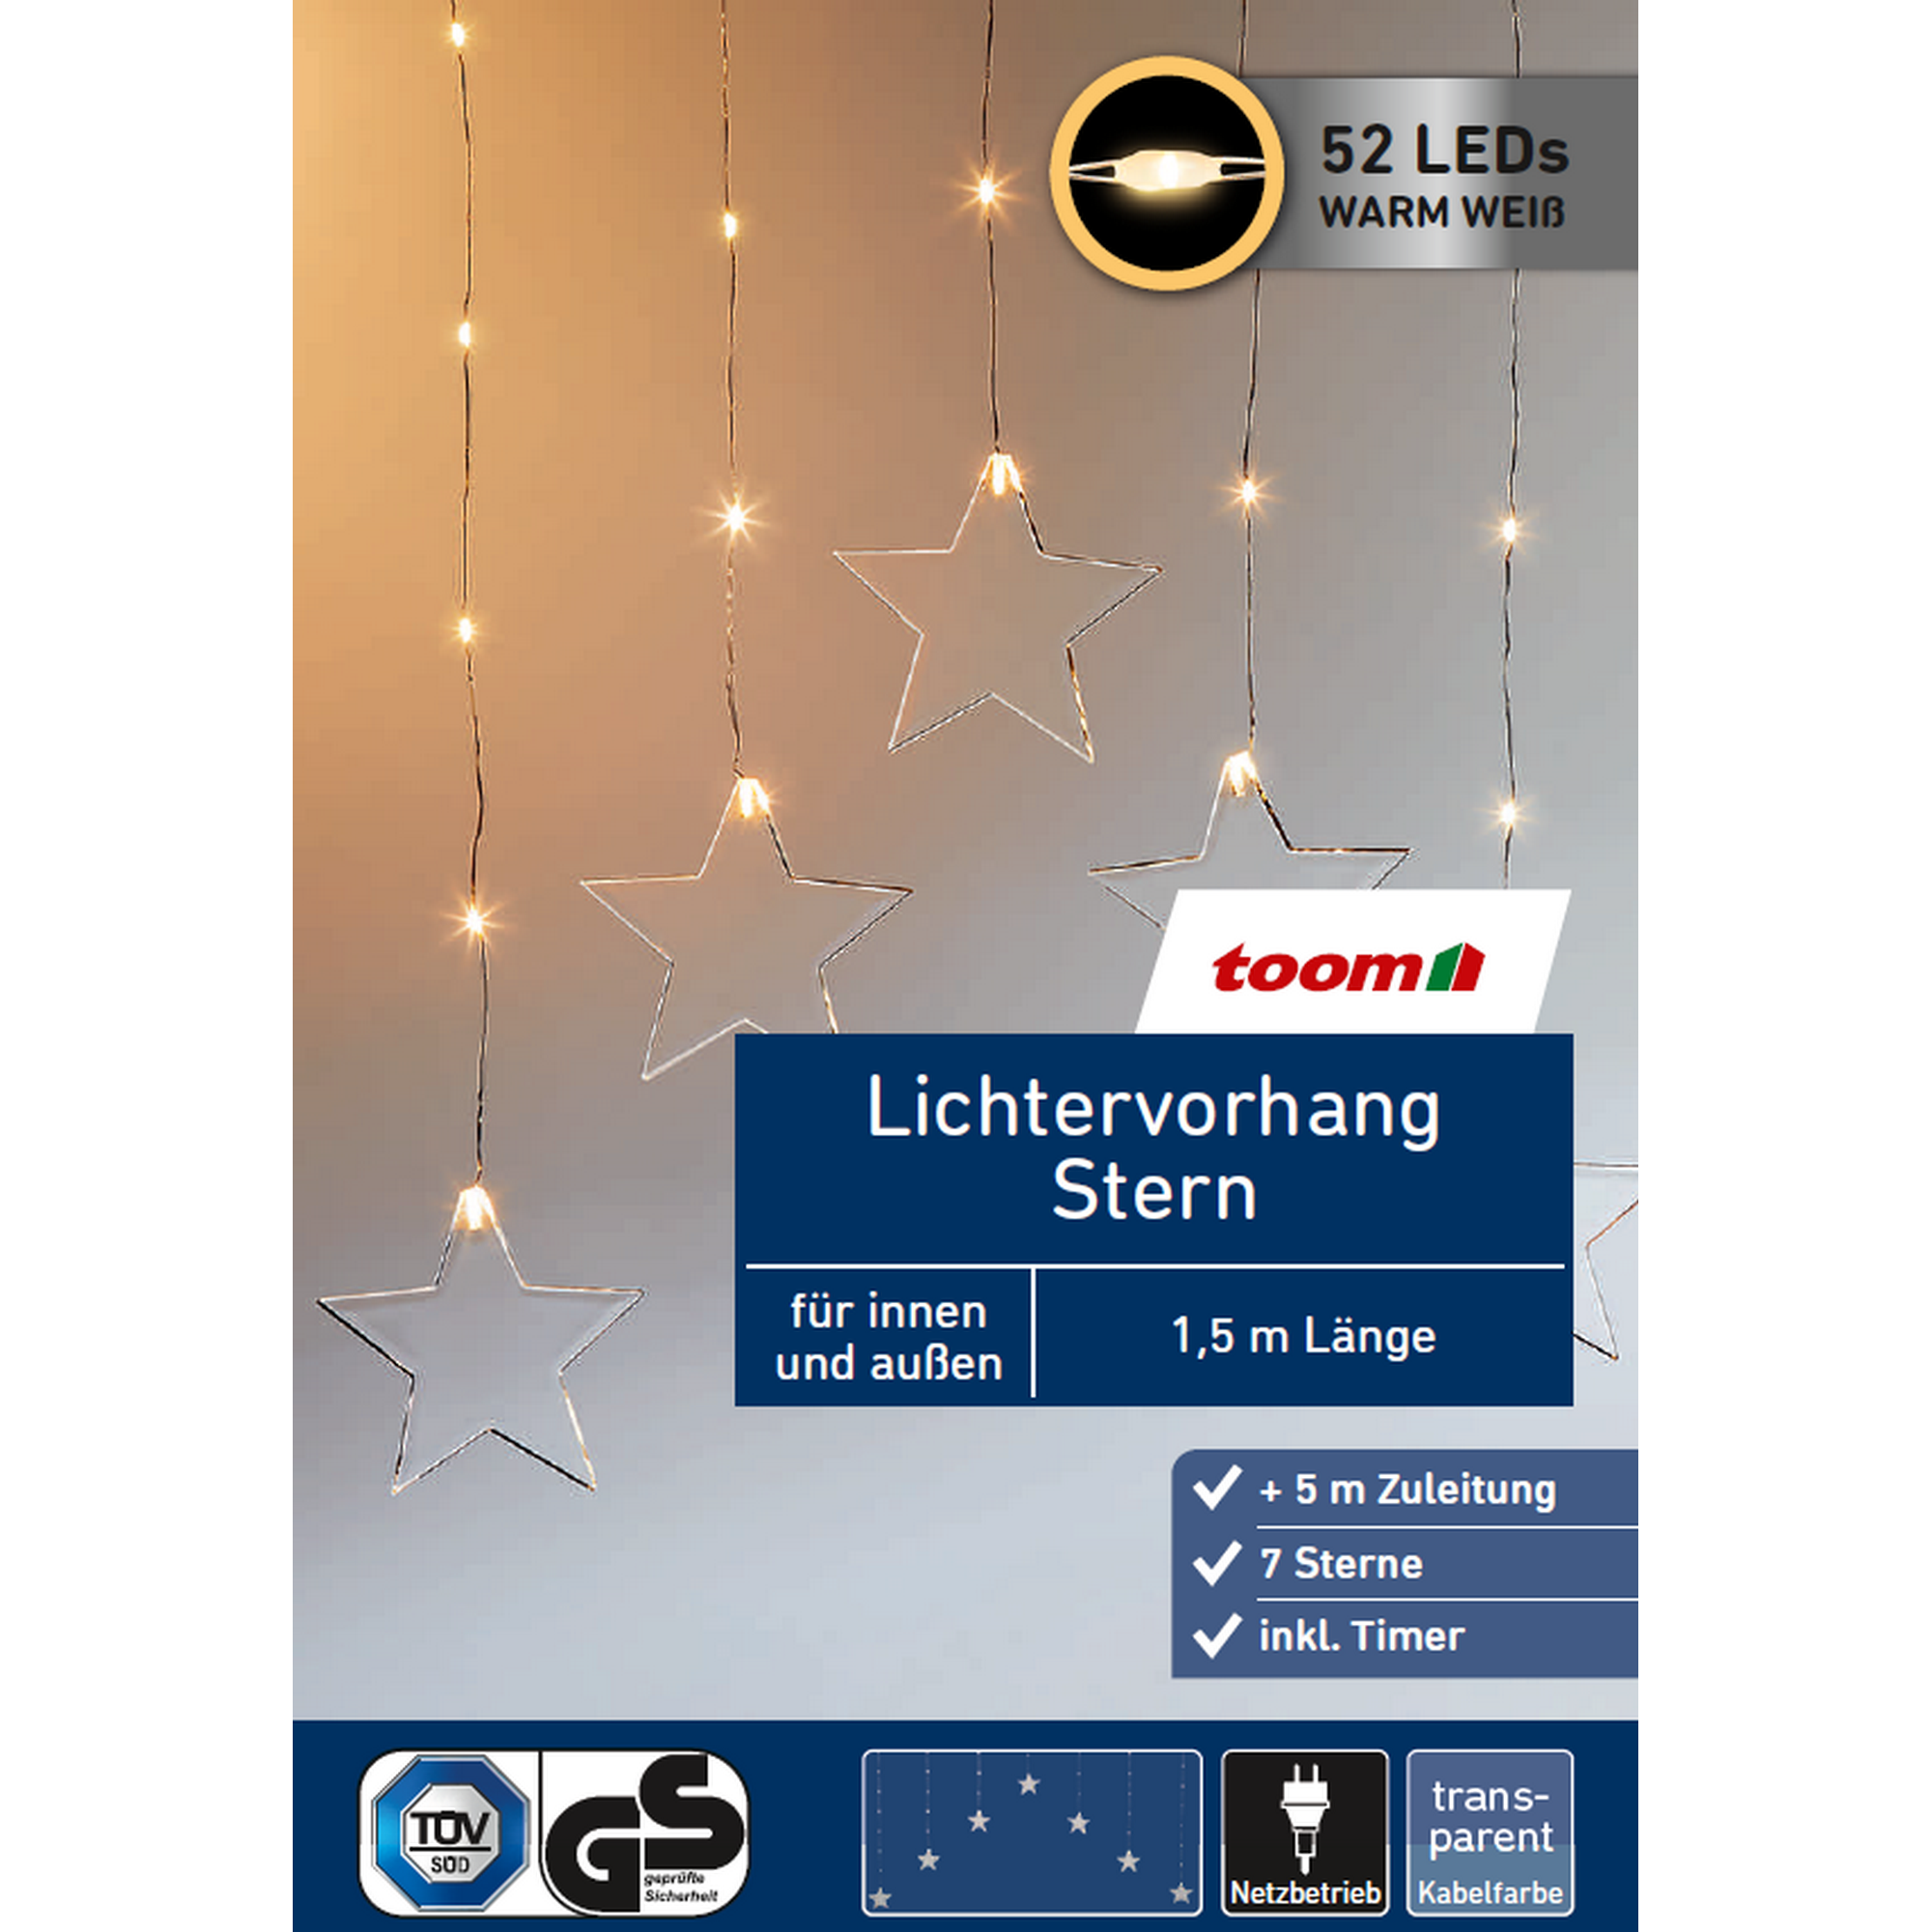 LED-Lichtervorhang 'Stern' 52 LEDs warmweiß 150 cm + product picture